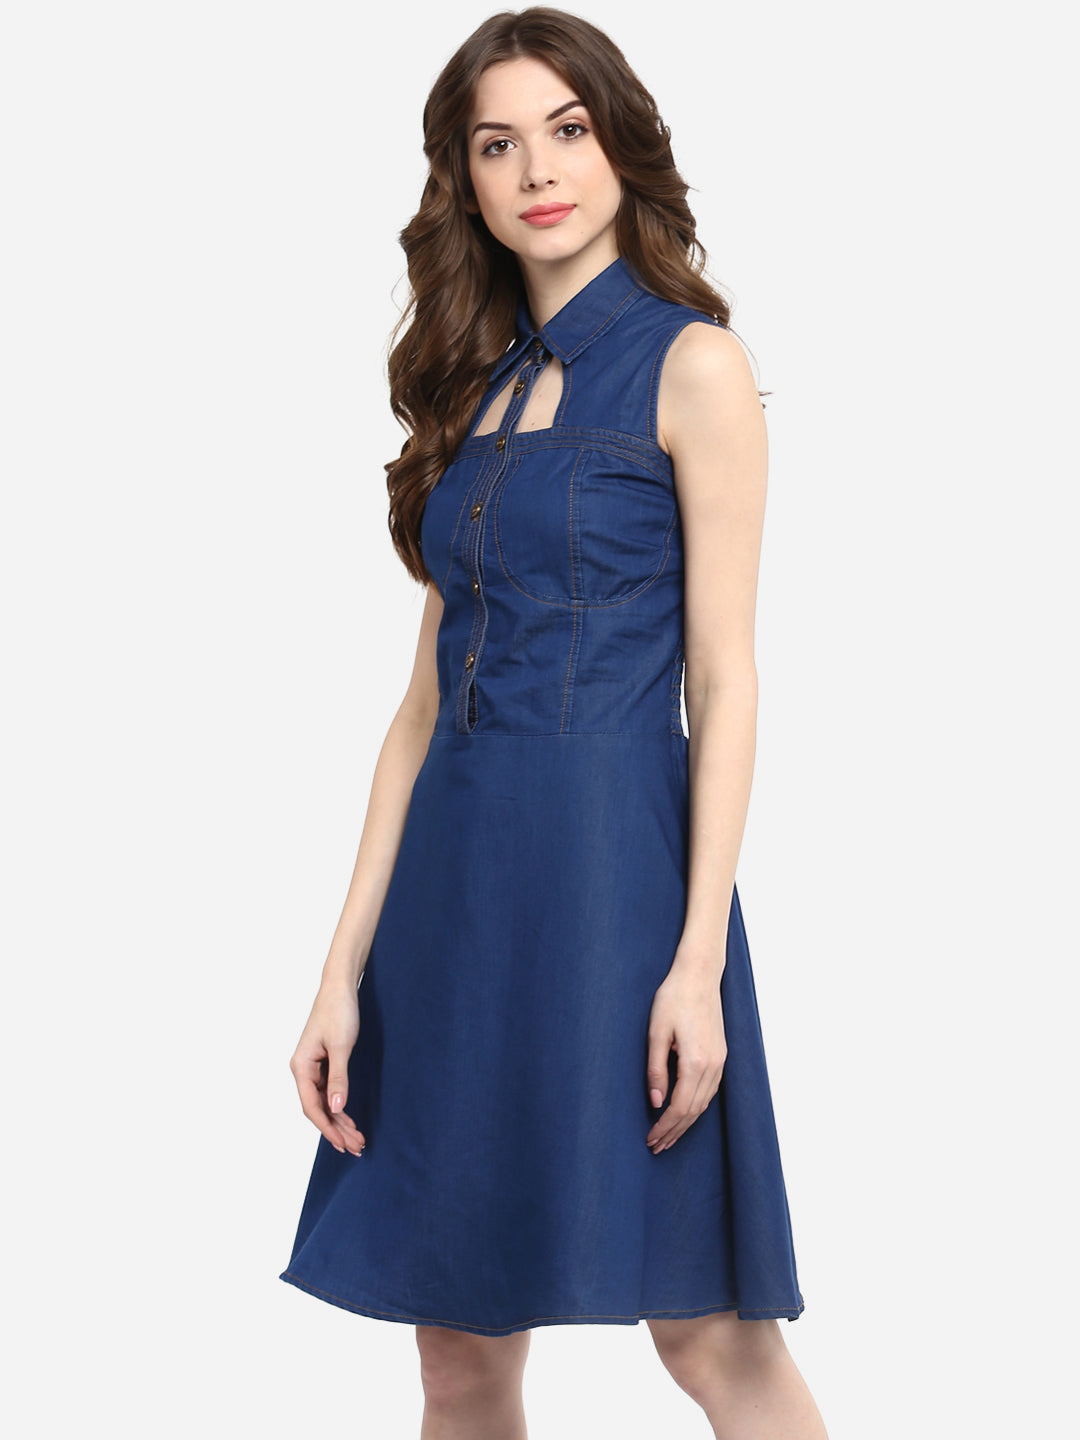 Women's Dark Blue Denim Dress with Neck cutout